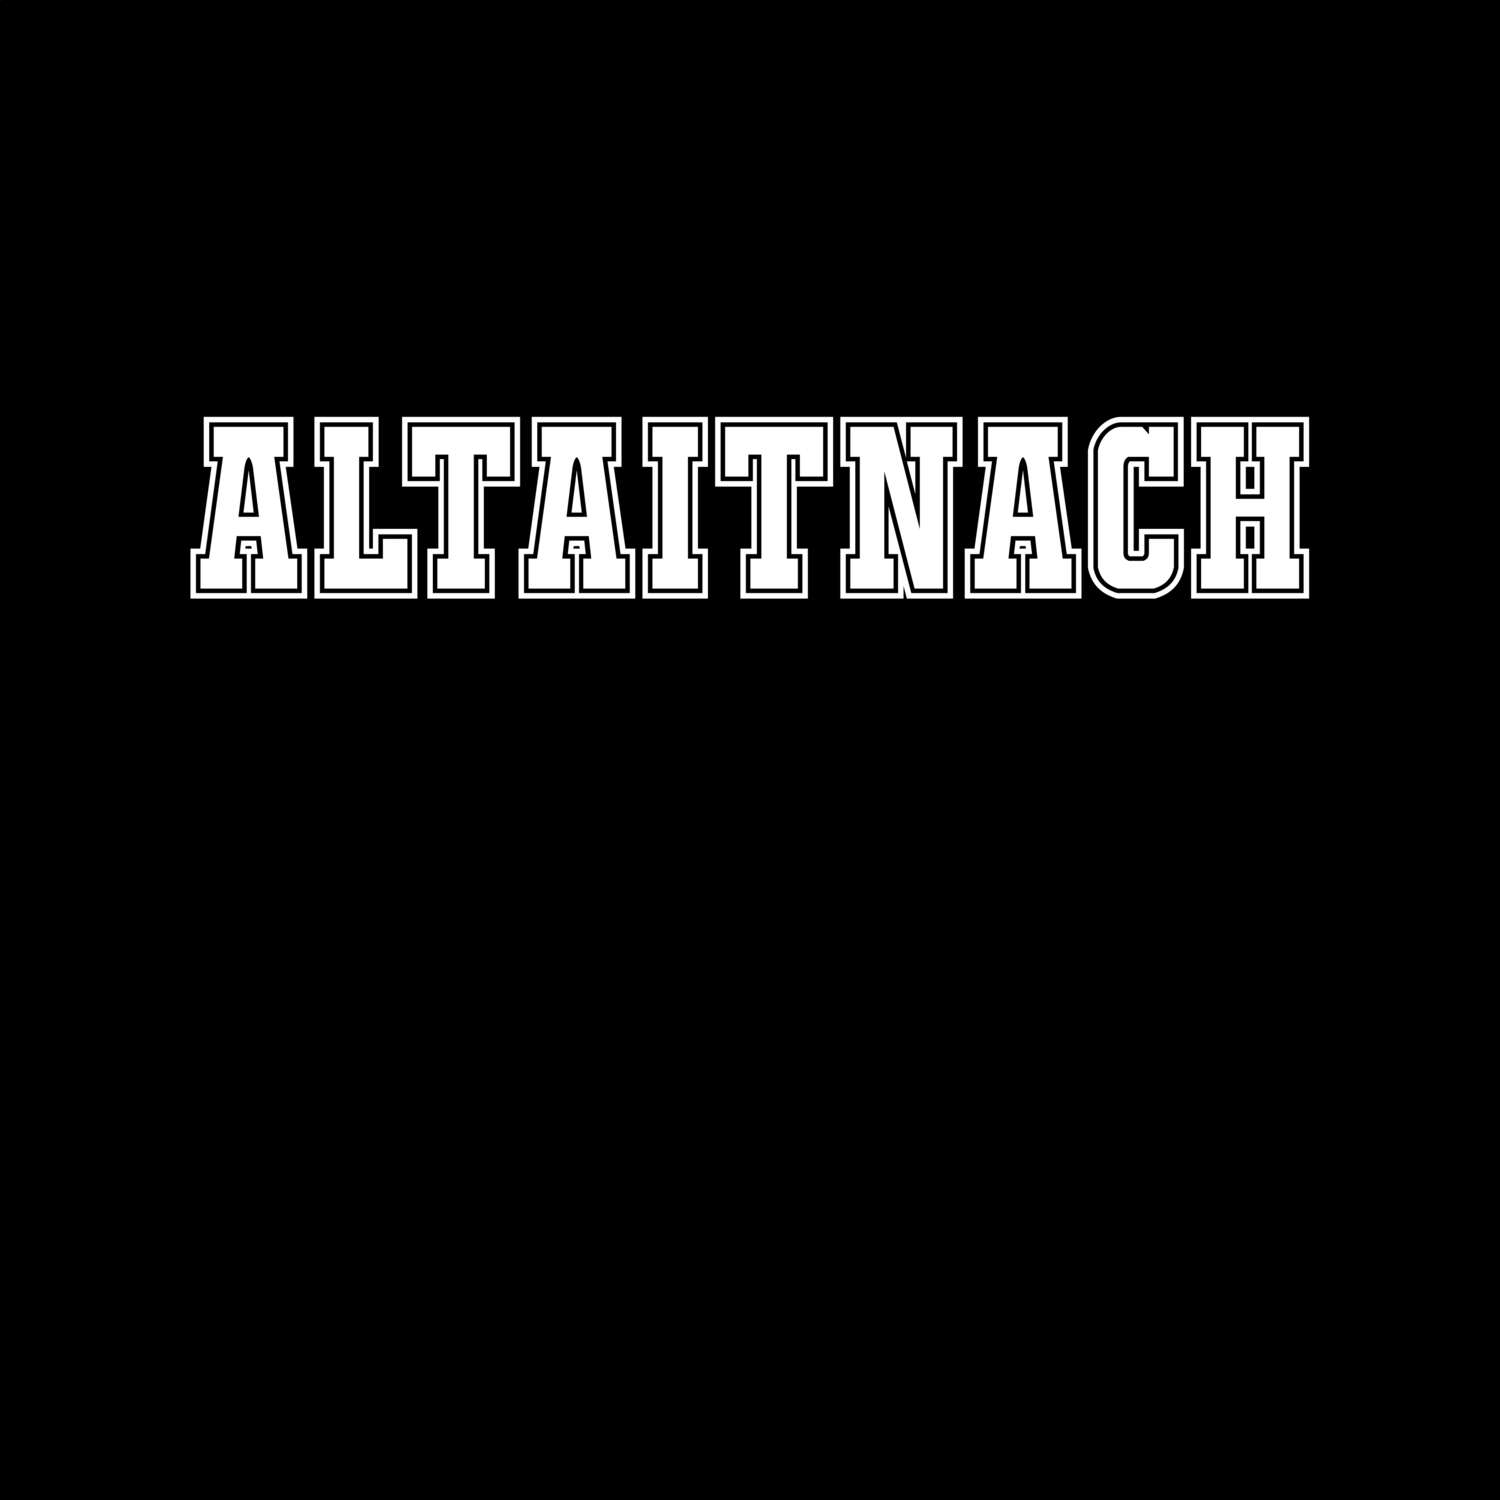 Altaitnach T-Shirt »Classic«